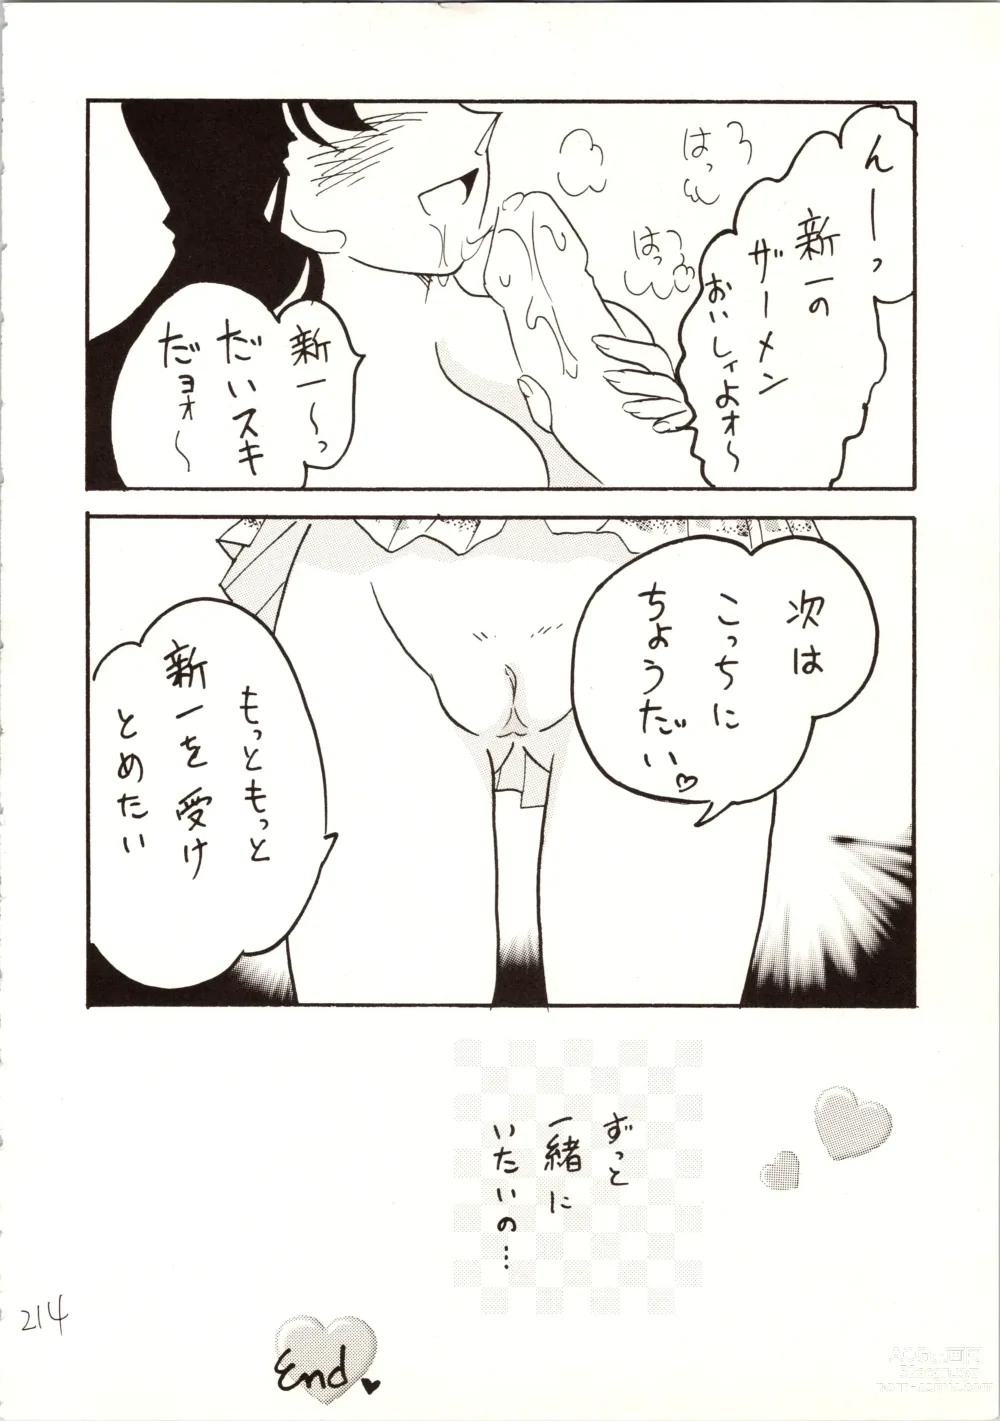 Page 214 of doujinshi Meitantei DX